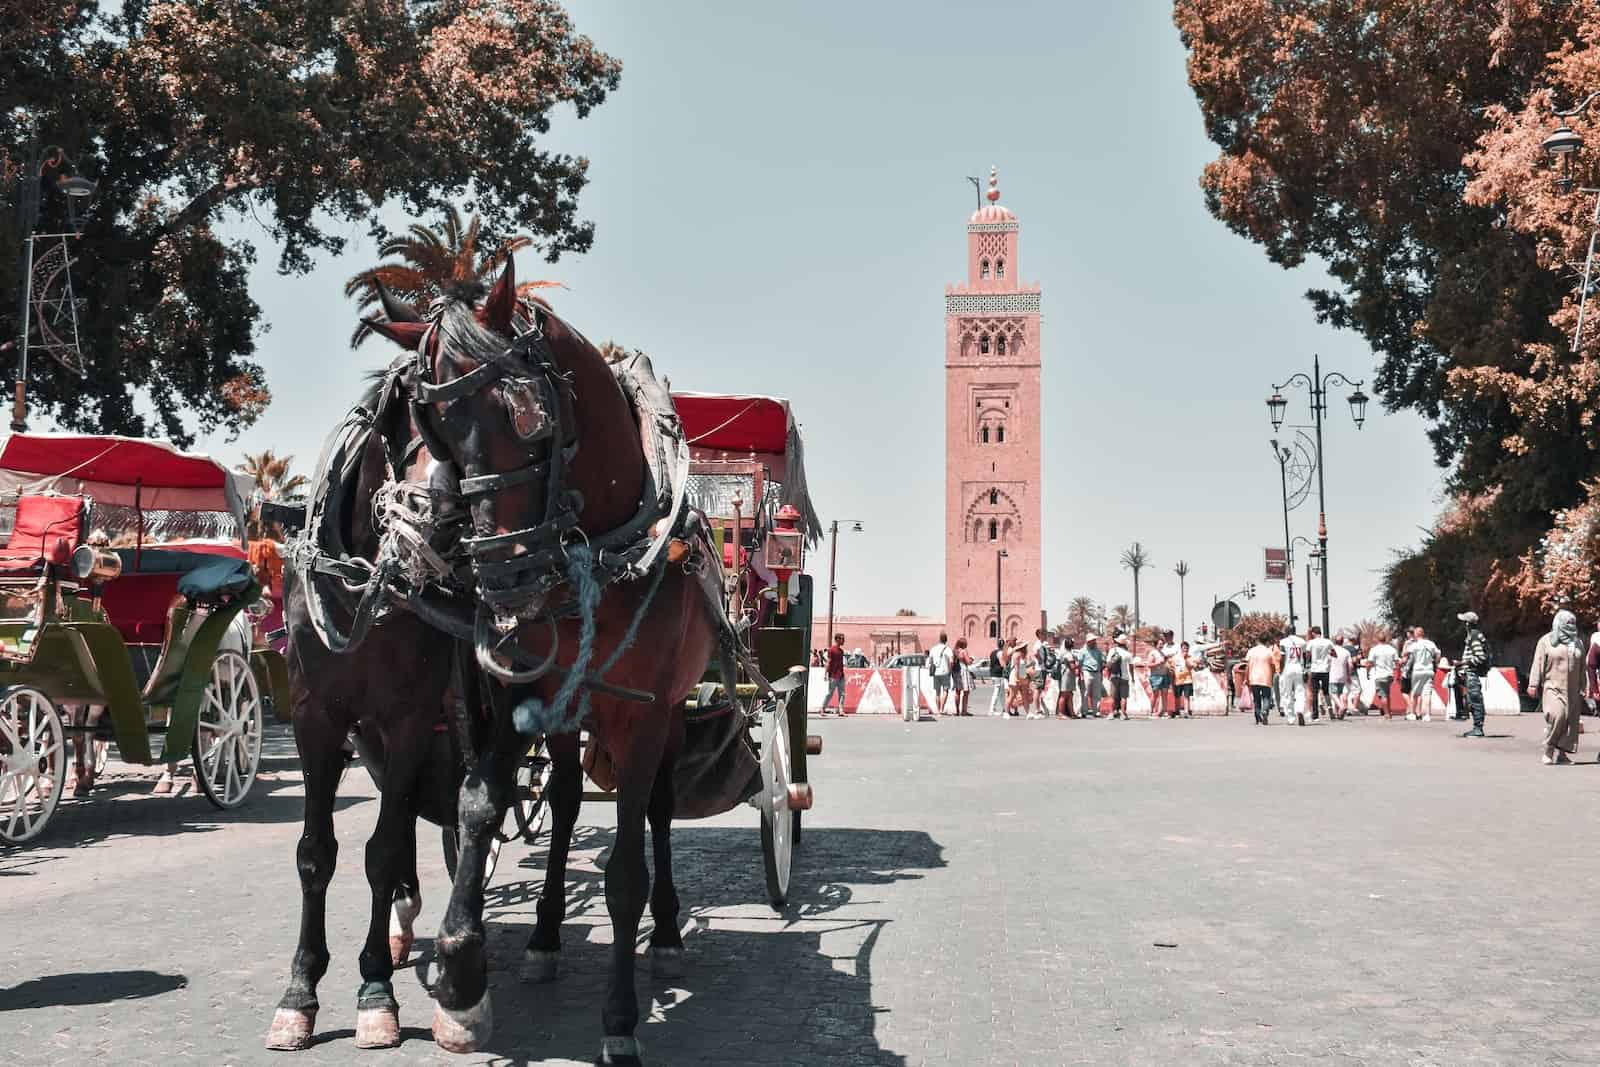 people riding horses medina of Marrakech daytime